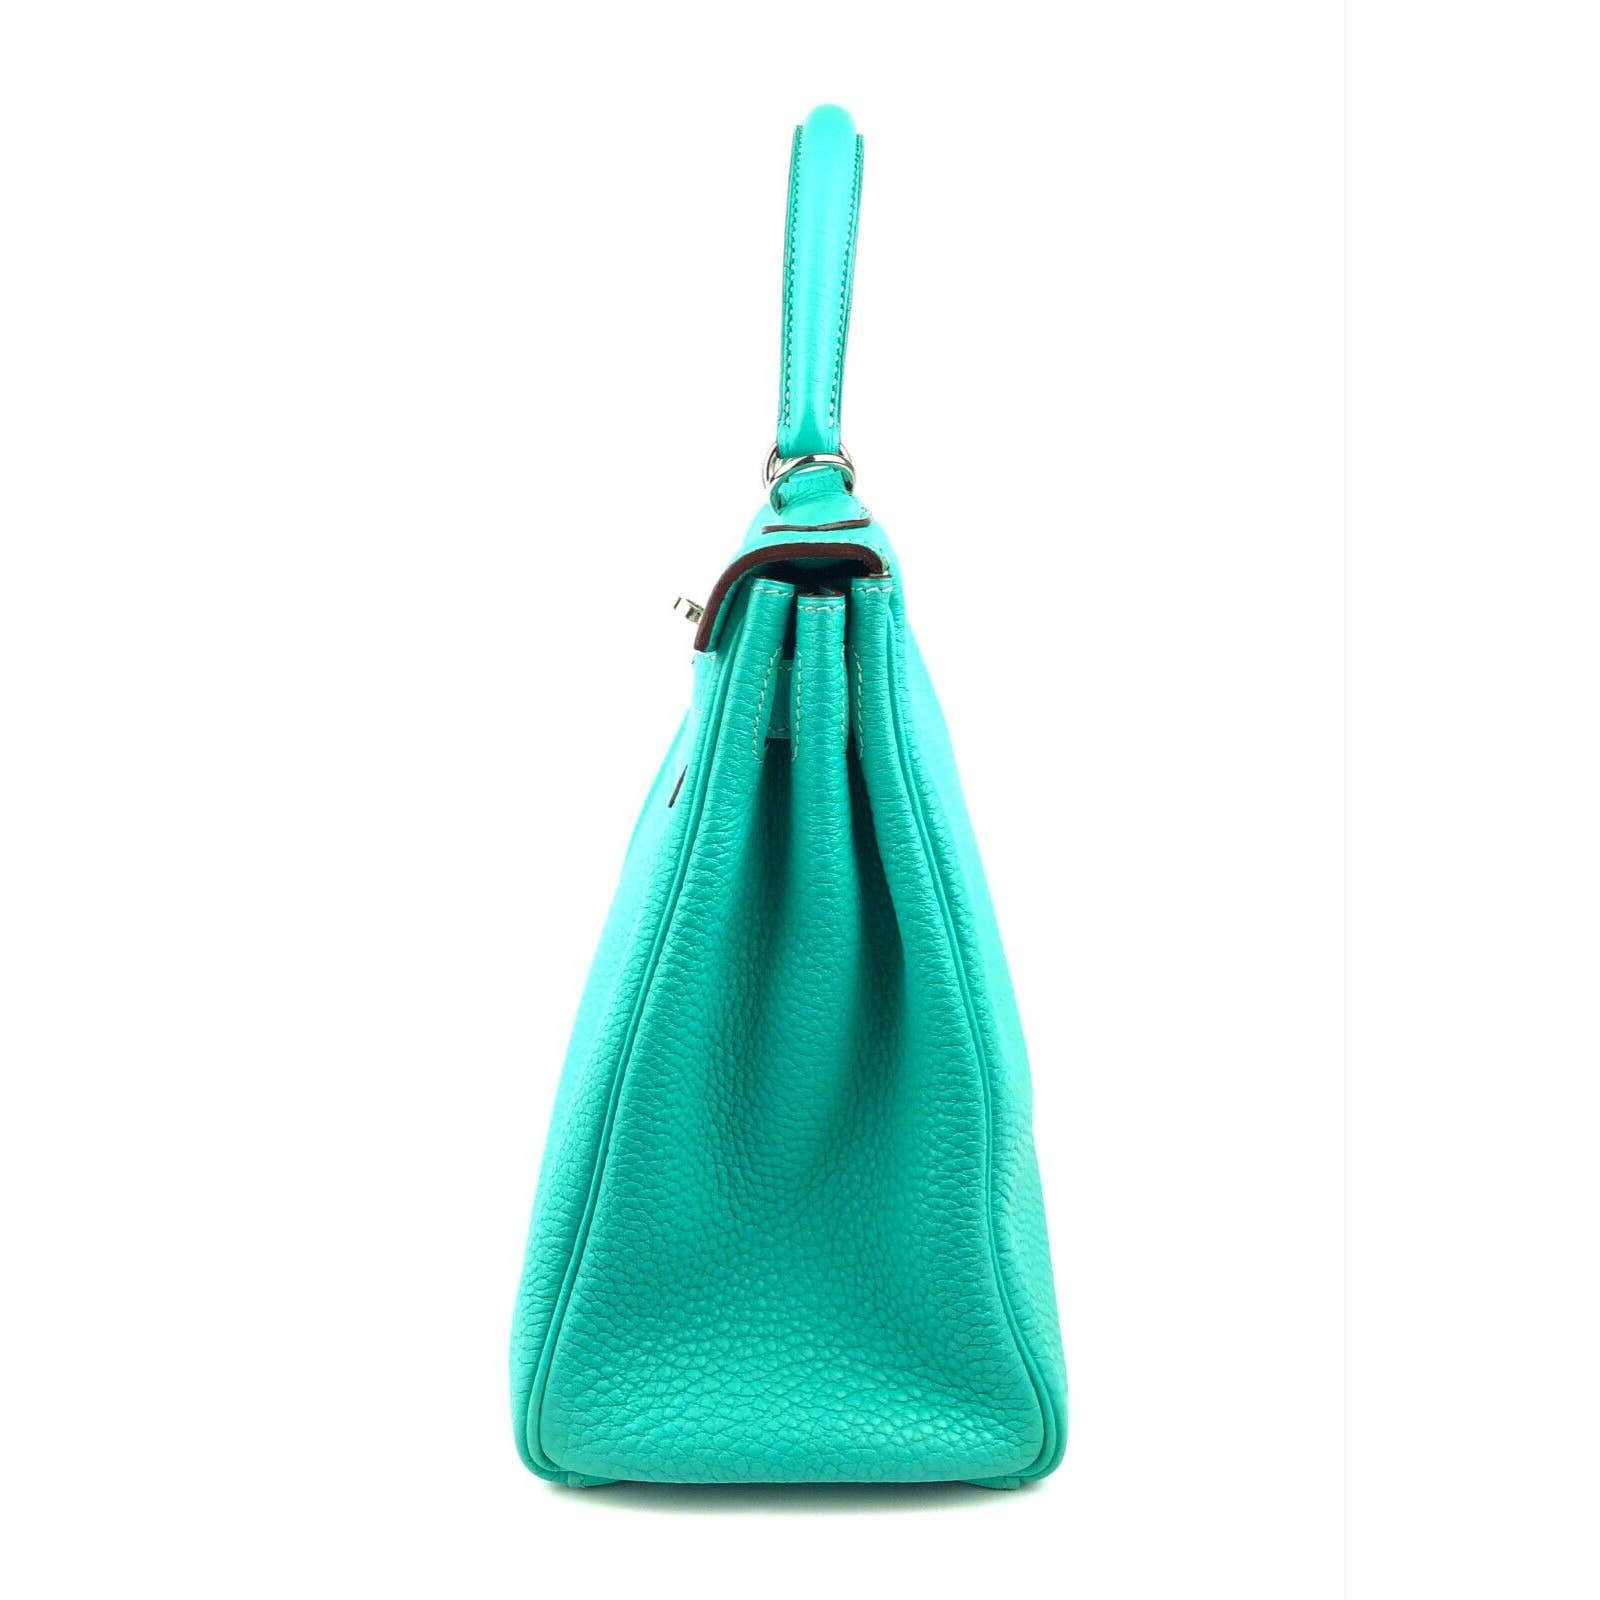 Hermès Kelly 28 cm Touch Handbag in Indigo Blue Togo Leather and